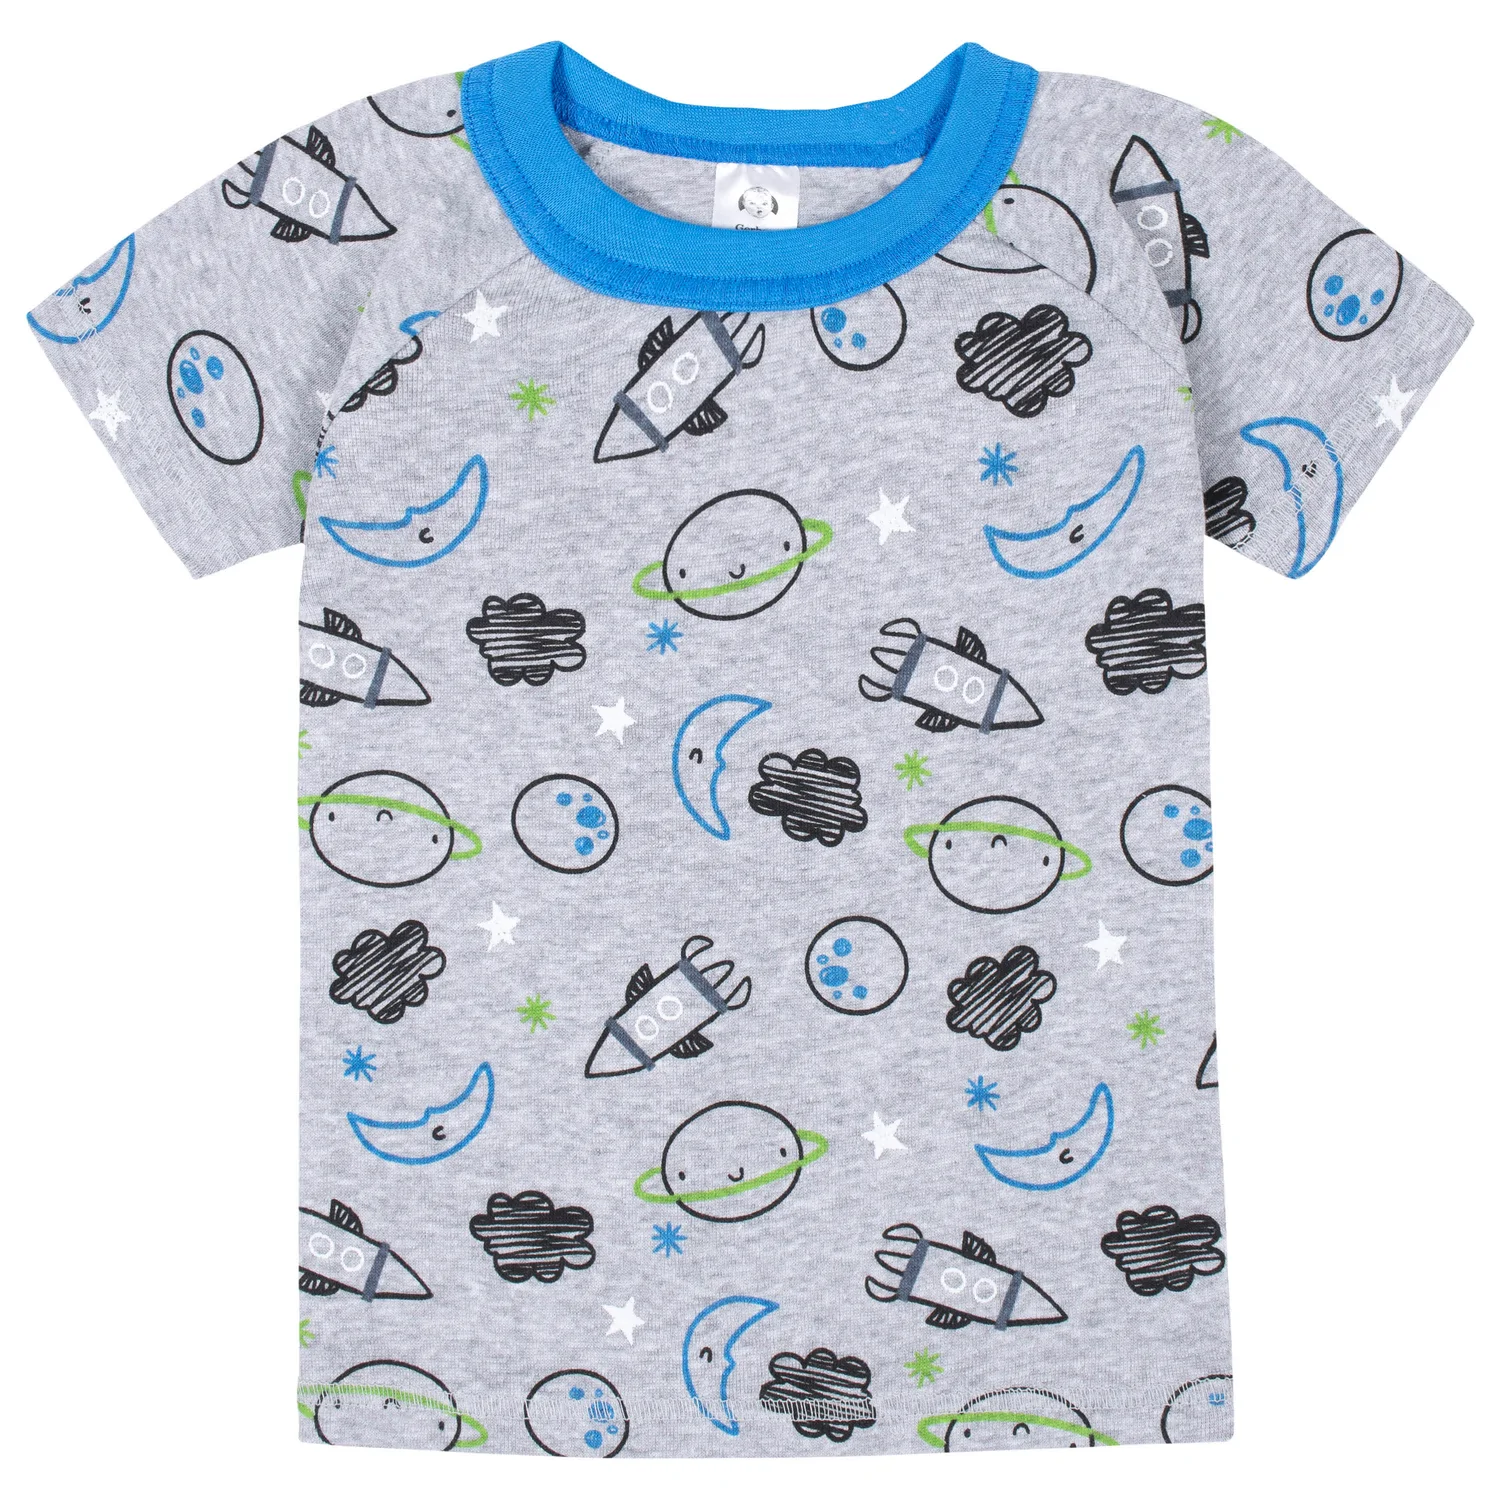 Infant & Toddler Boys Space Snug Fit Cotton Pajamas